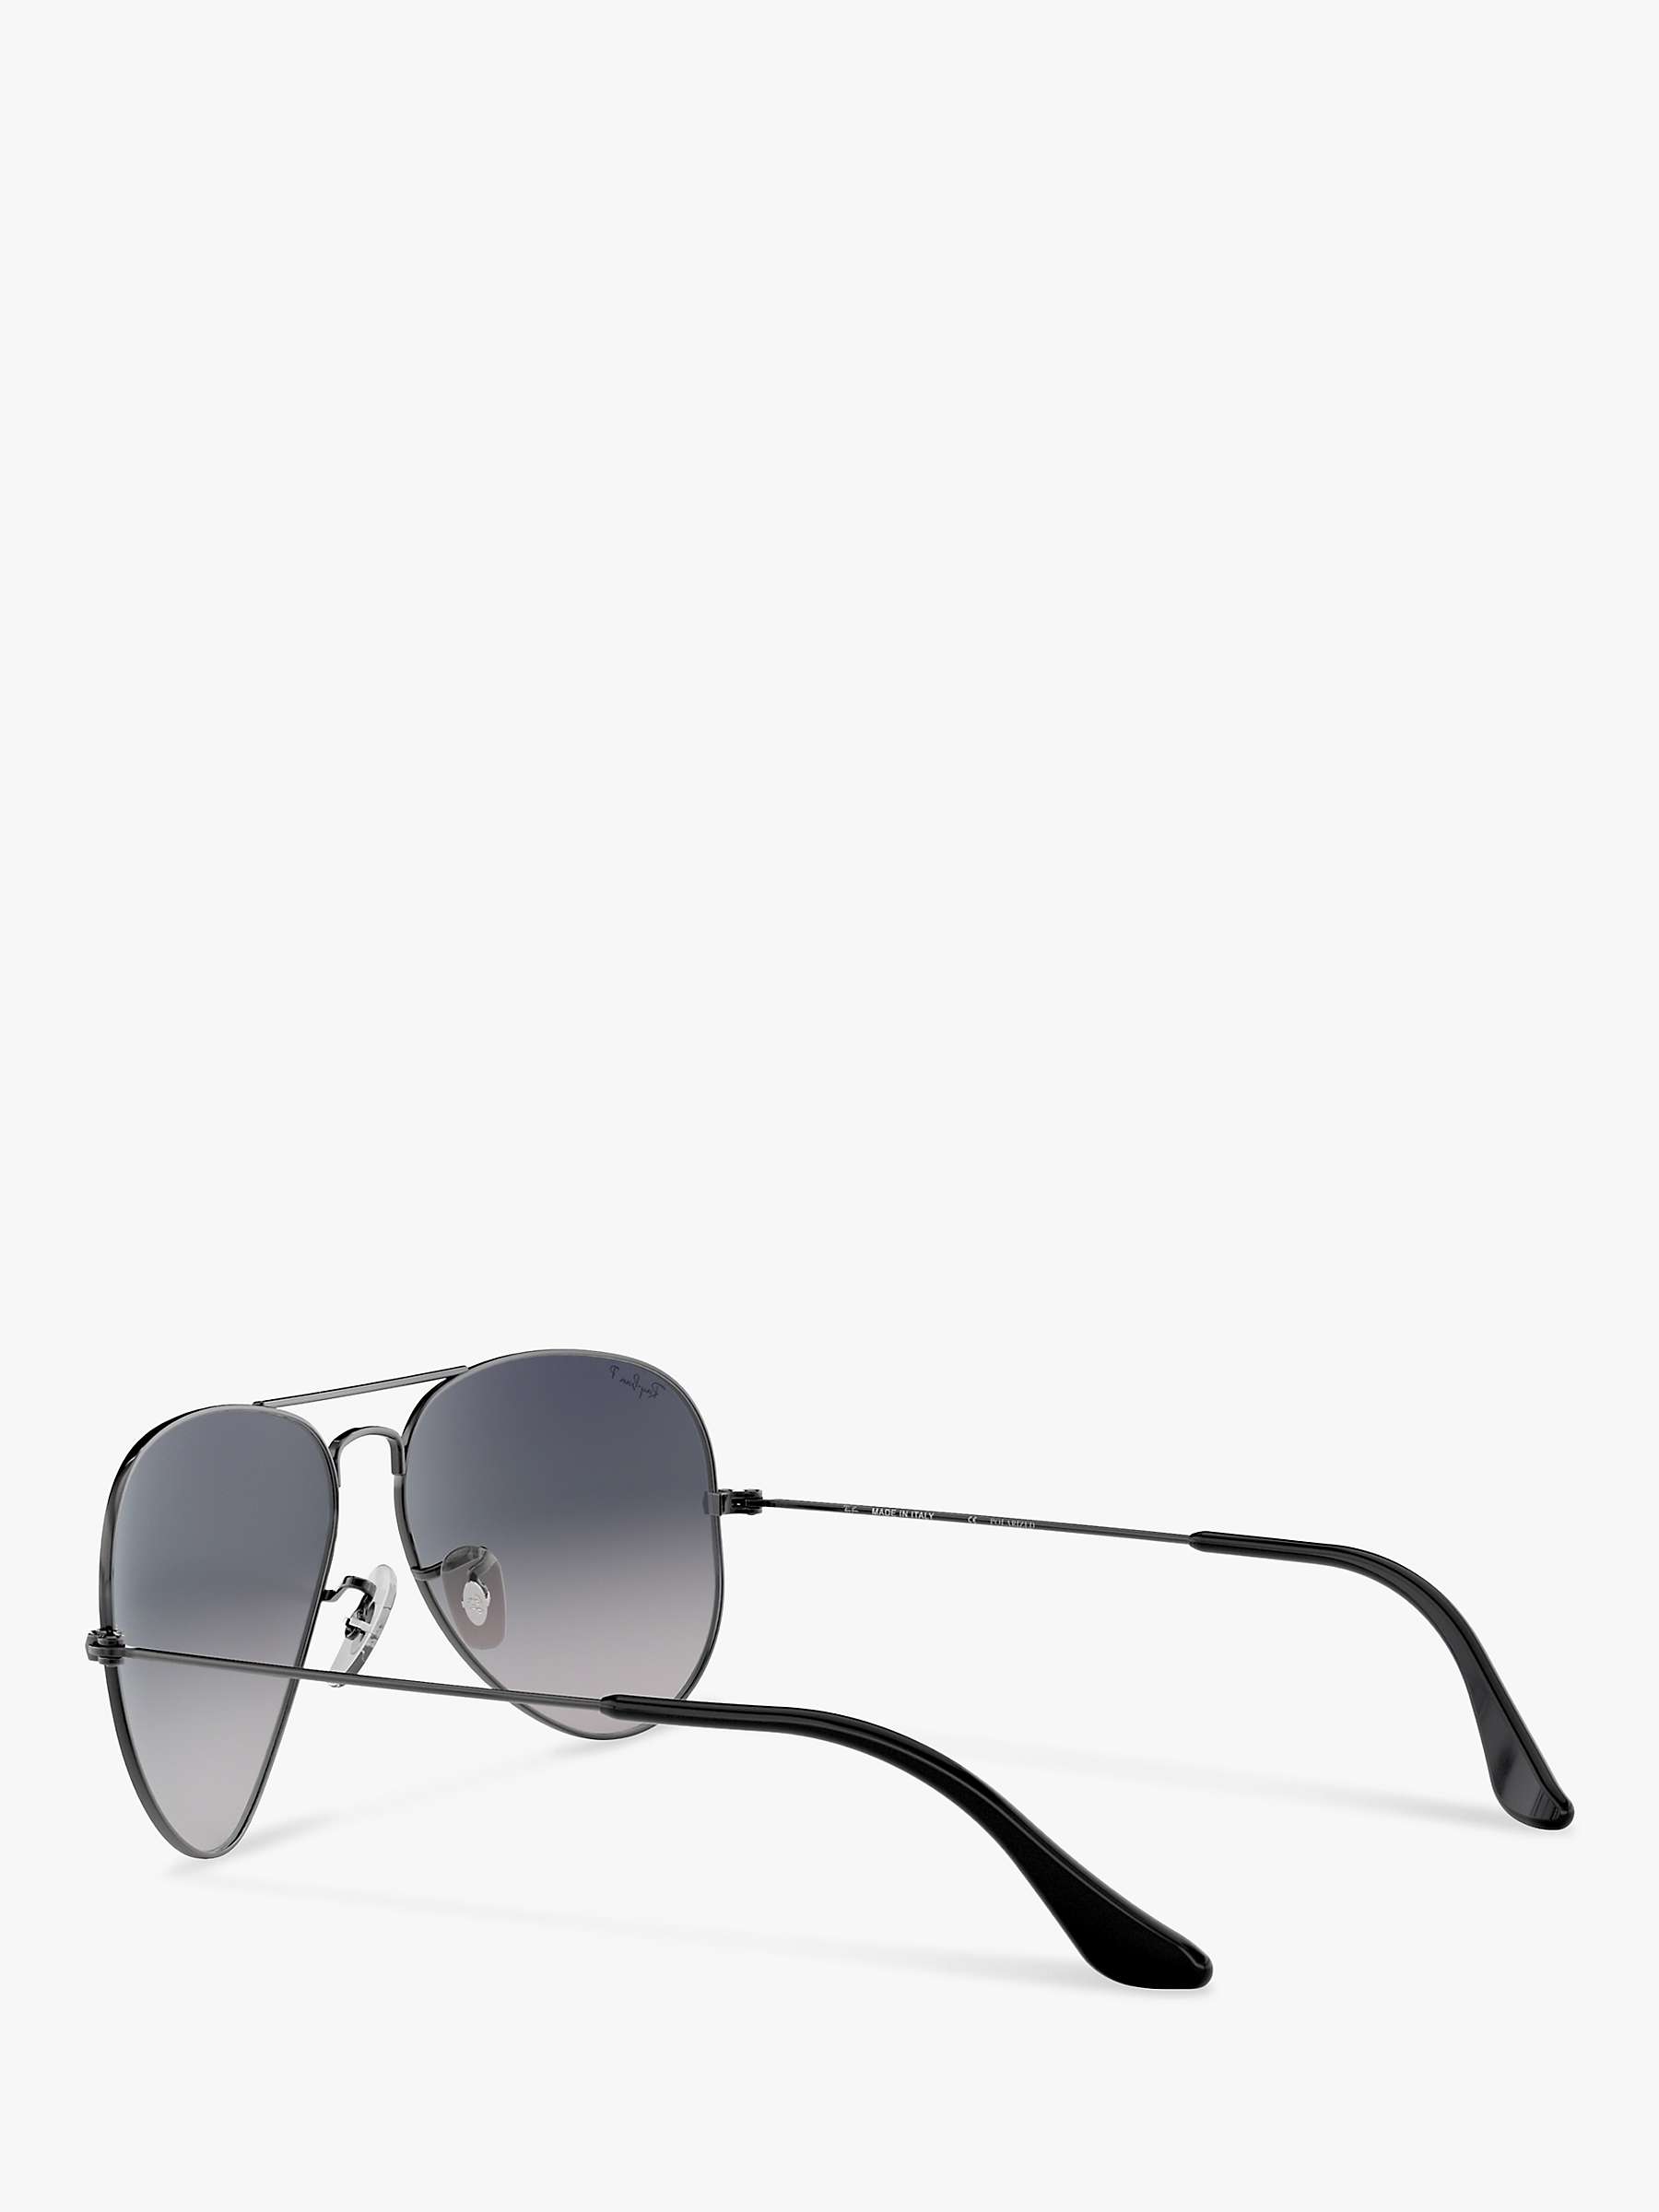 Buy Ray-Ban RB3025 004/78 Aviator Sunglasses, Gunmetal Online at johnlewis.com